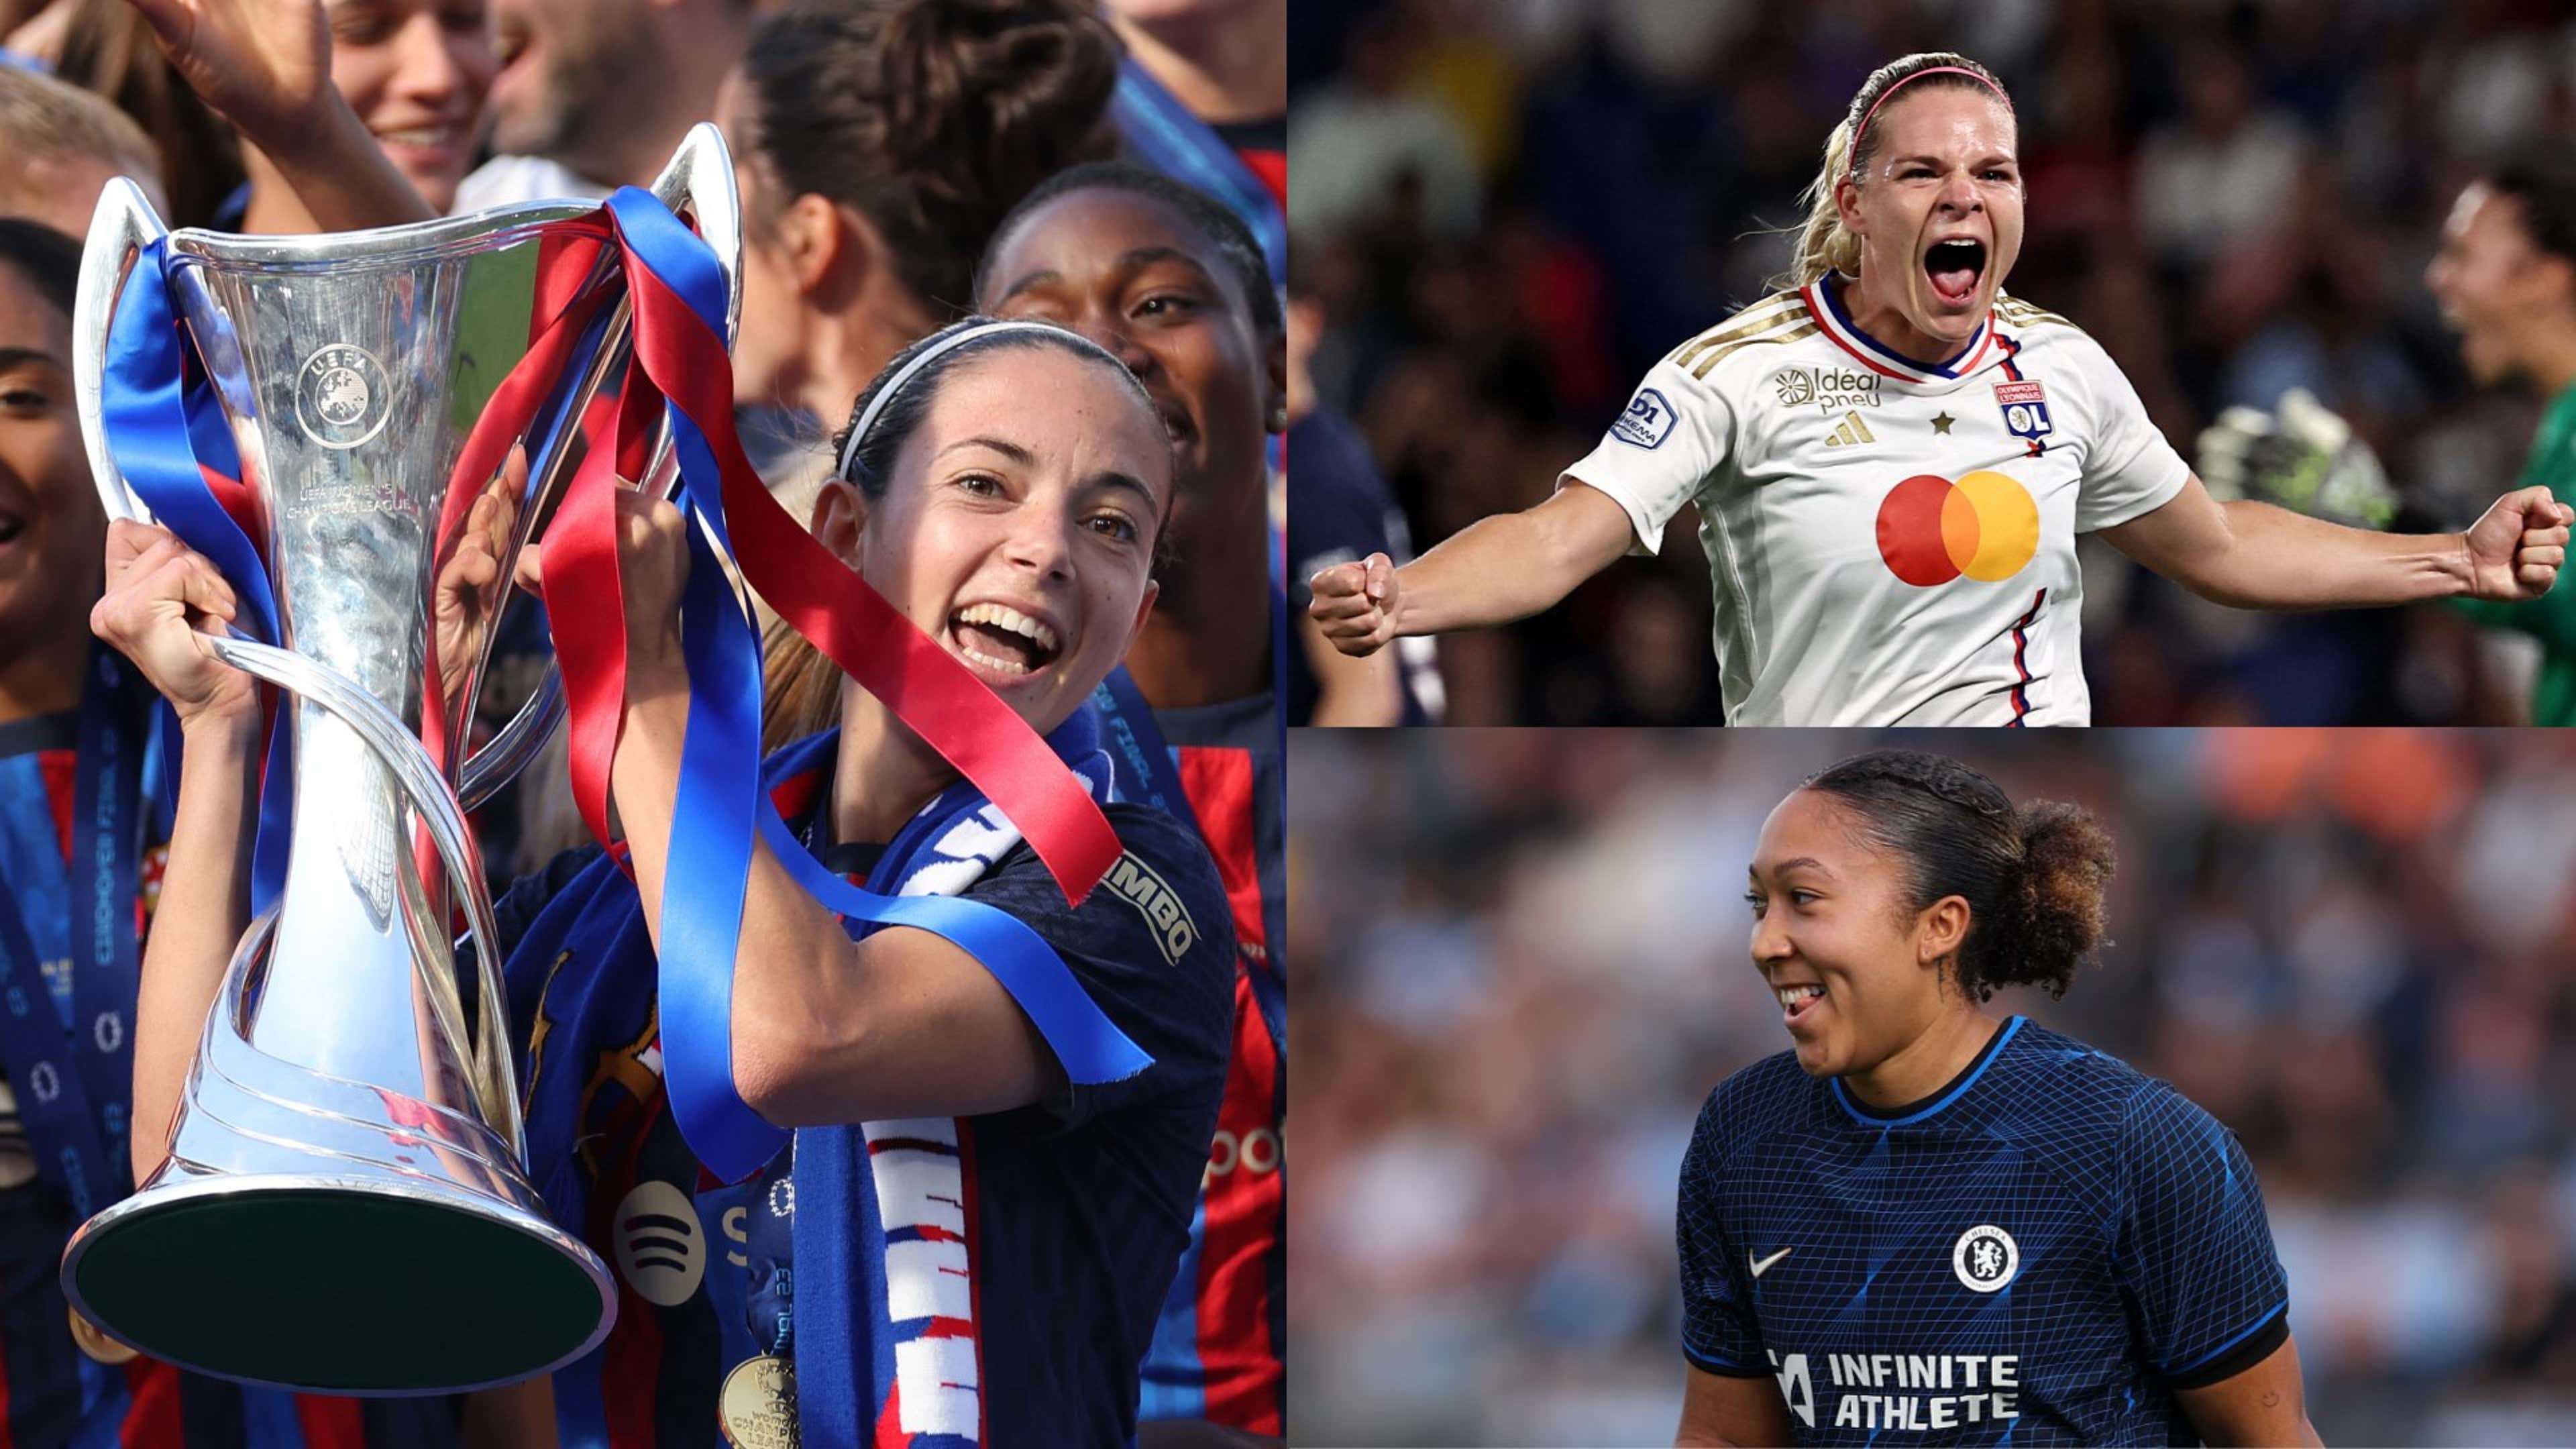 Dois jogos amanhã definem últimos semifinalistas da Champions League  feminina